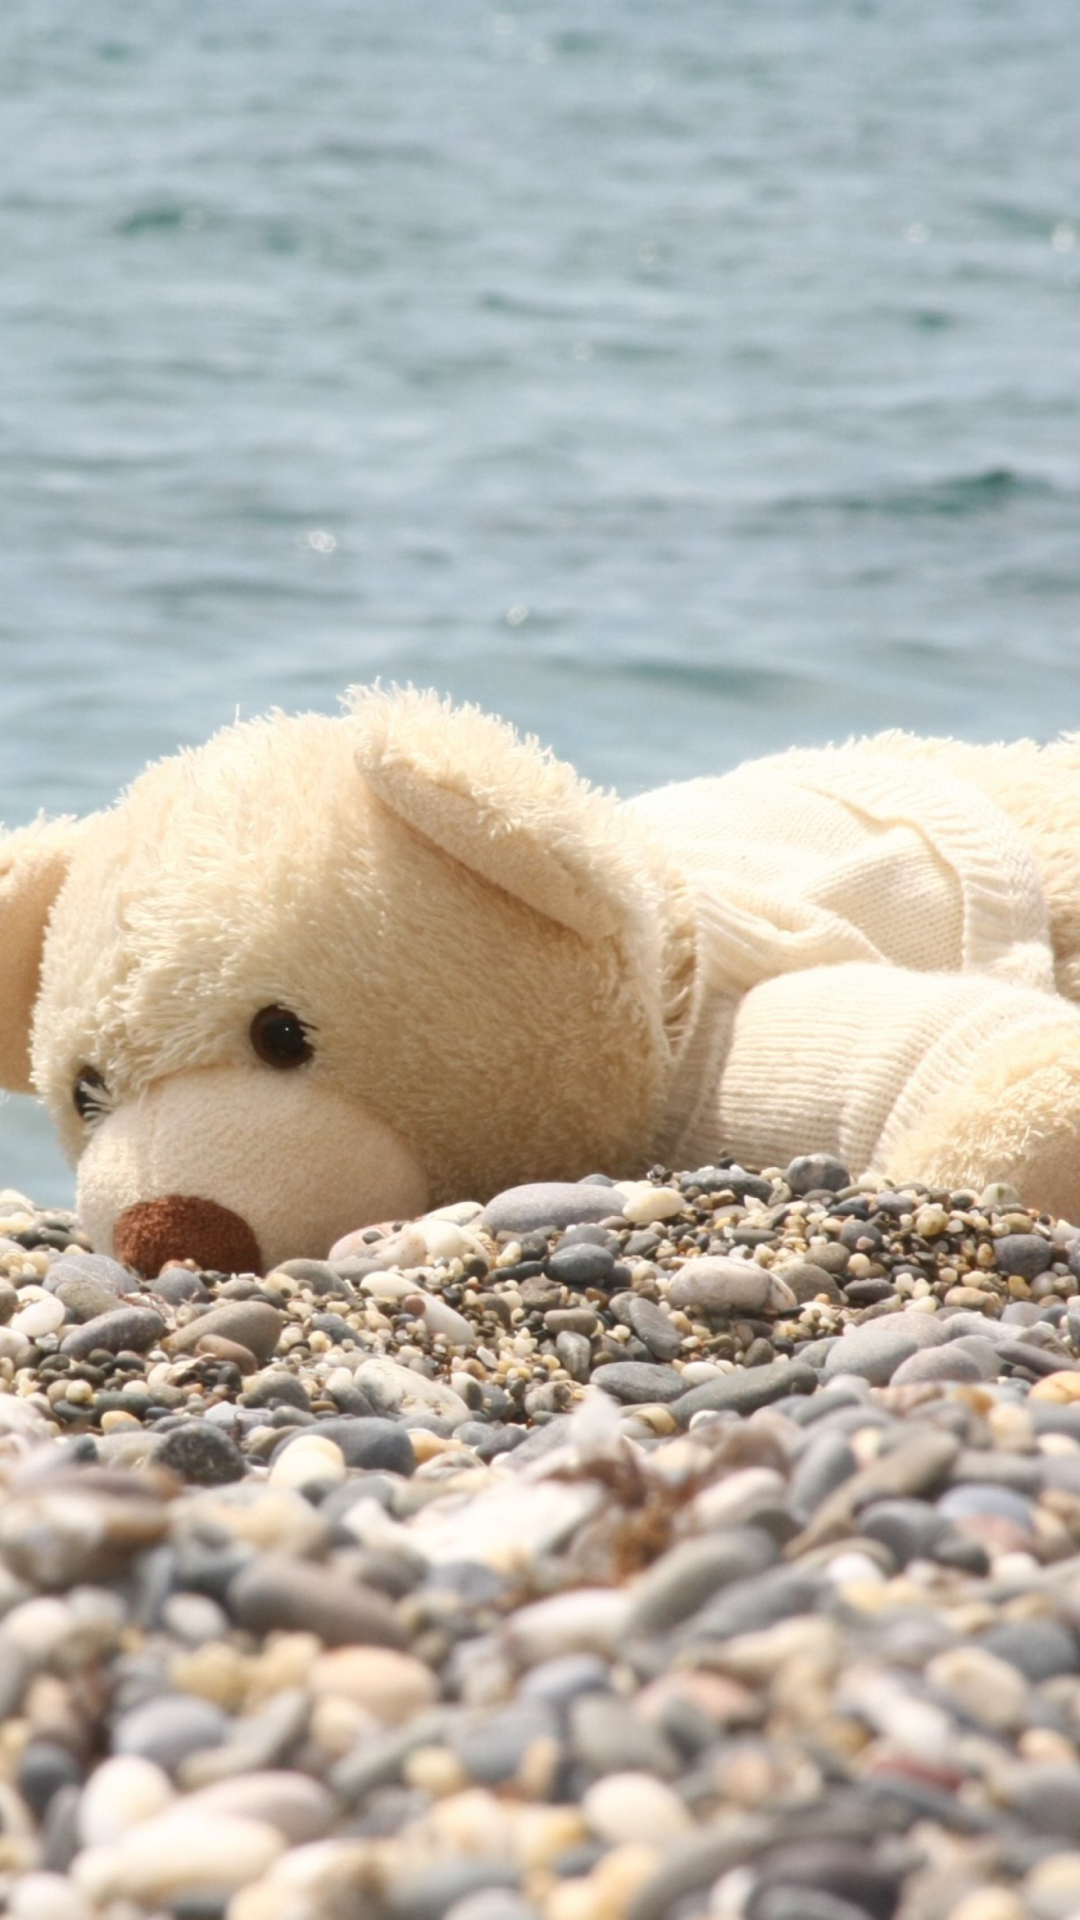 White Teddy Forgotten On Beach wallpaper 1080x1920